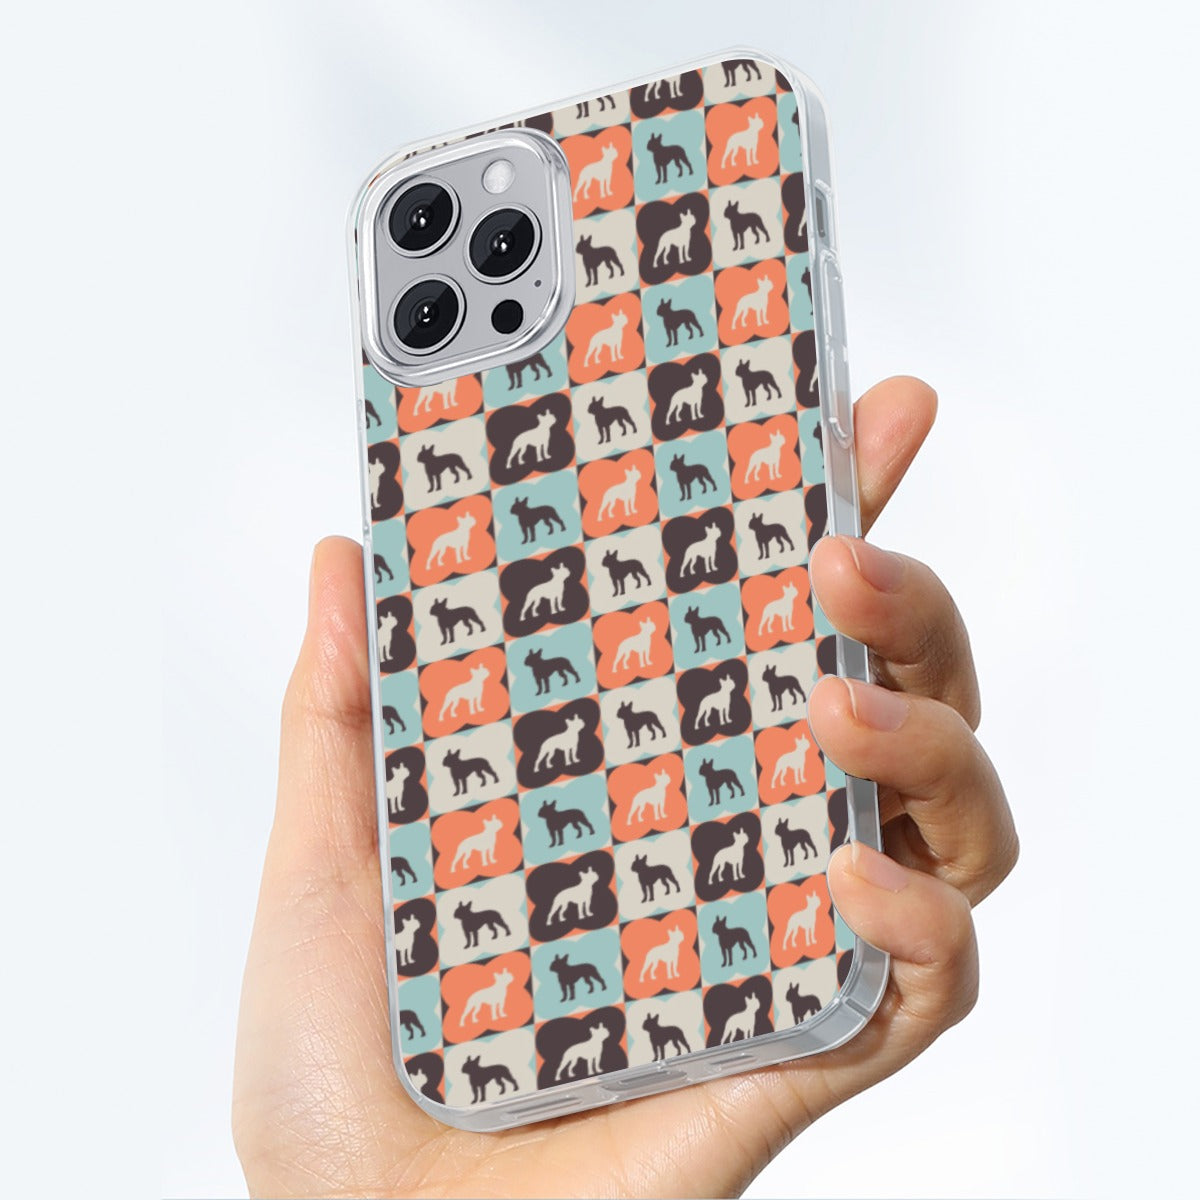 Jake  - iPhone case for Boston Terrier lovers